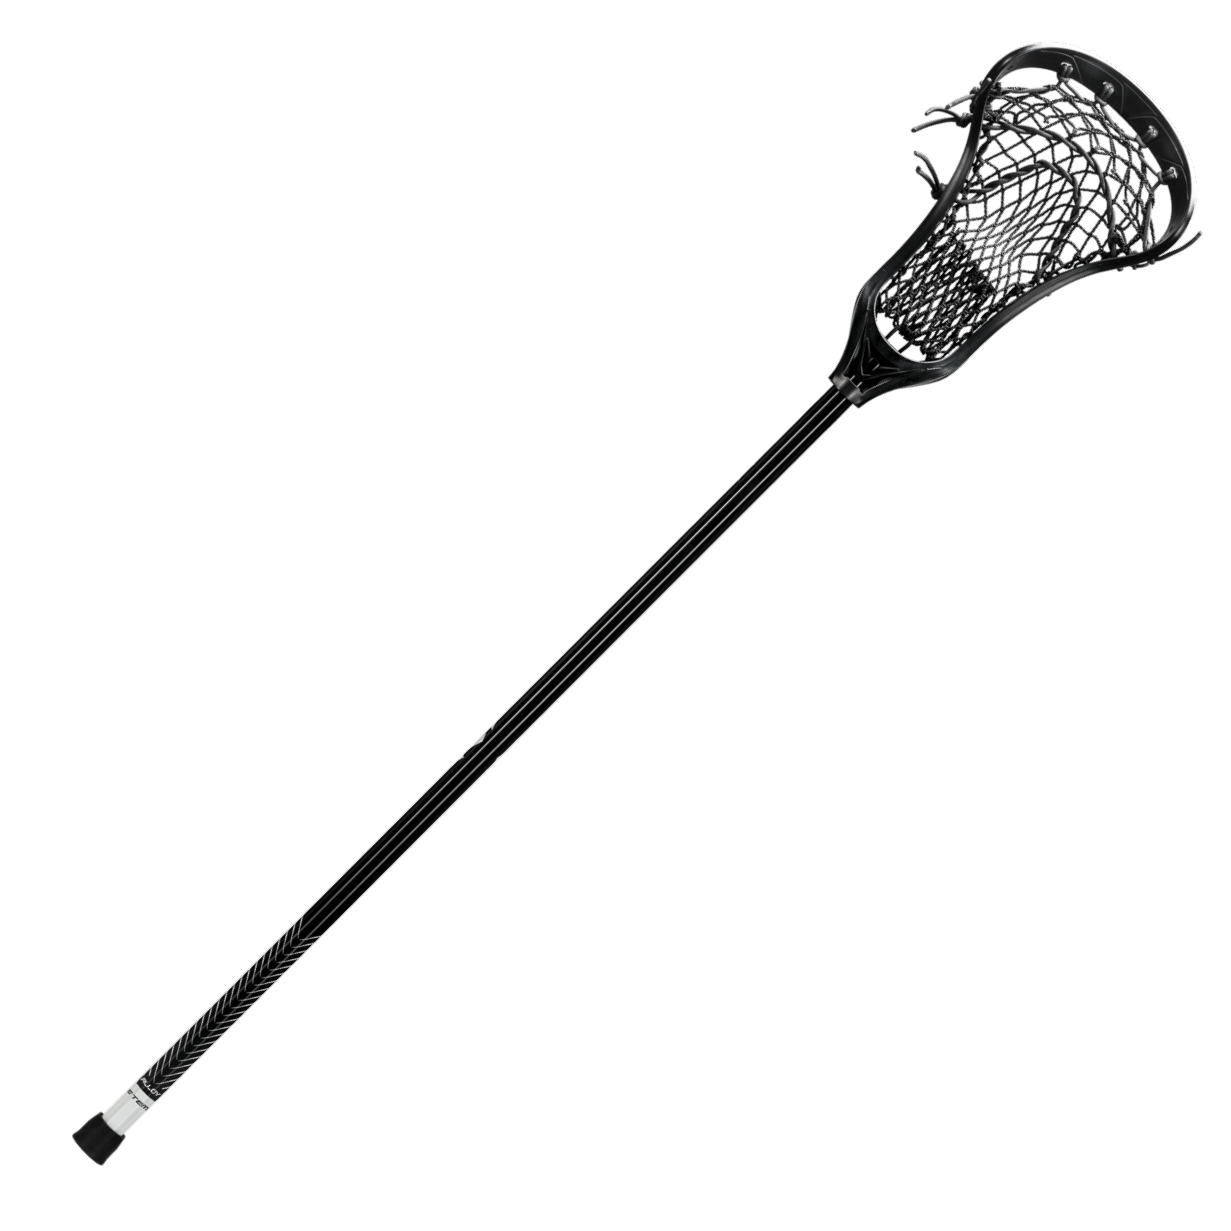 True Raven Women's Complete Lacrosse Stick in White/Black